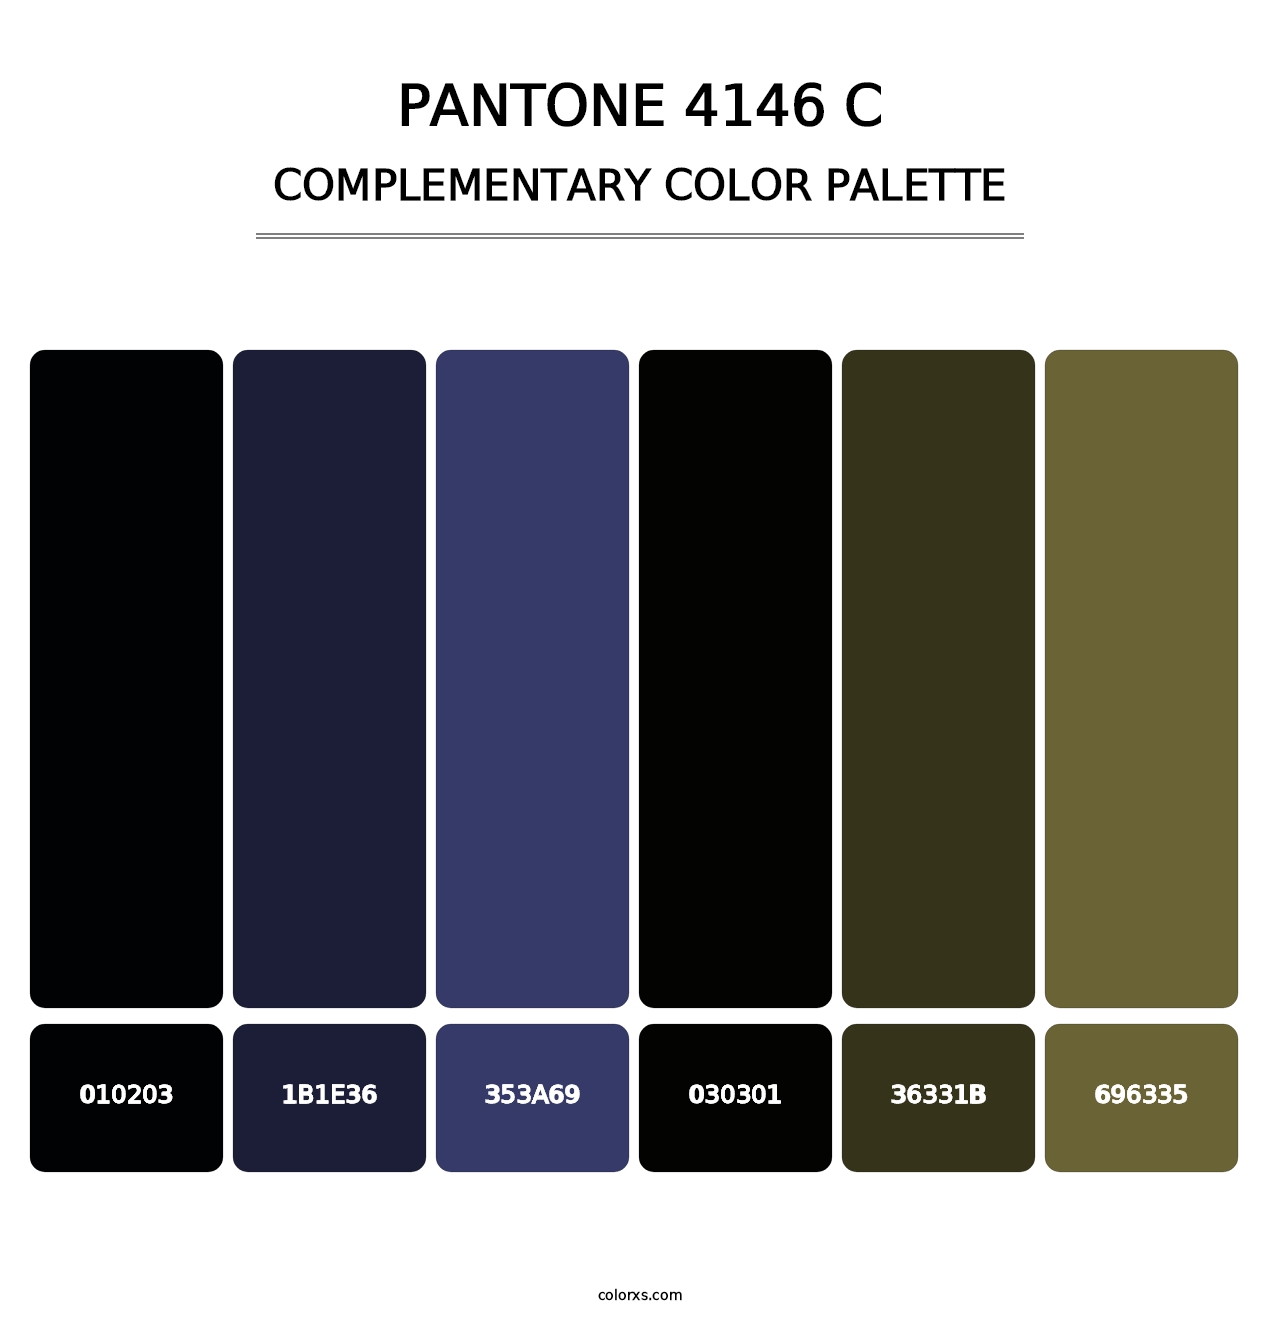 PANTONE 4146 C - Complementary Color Palette